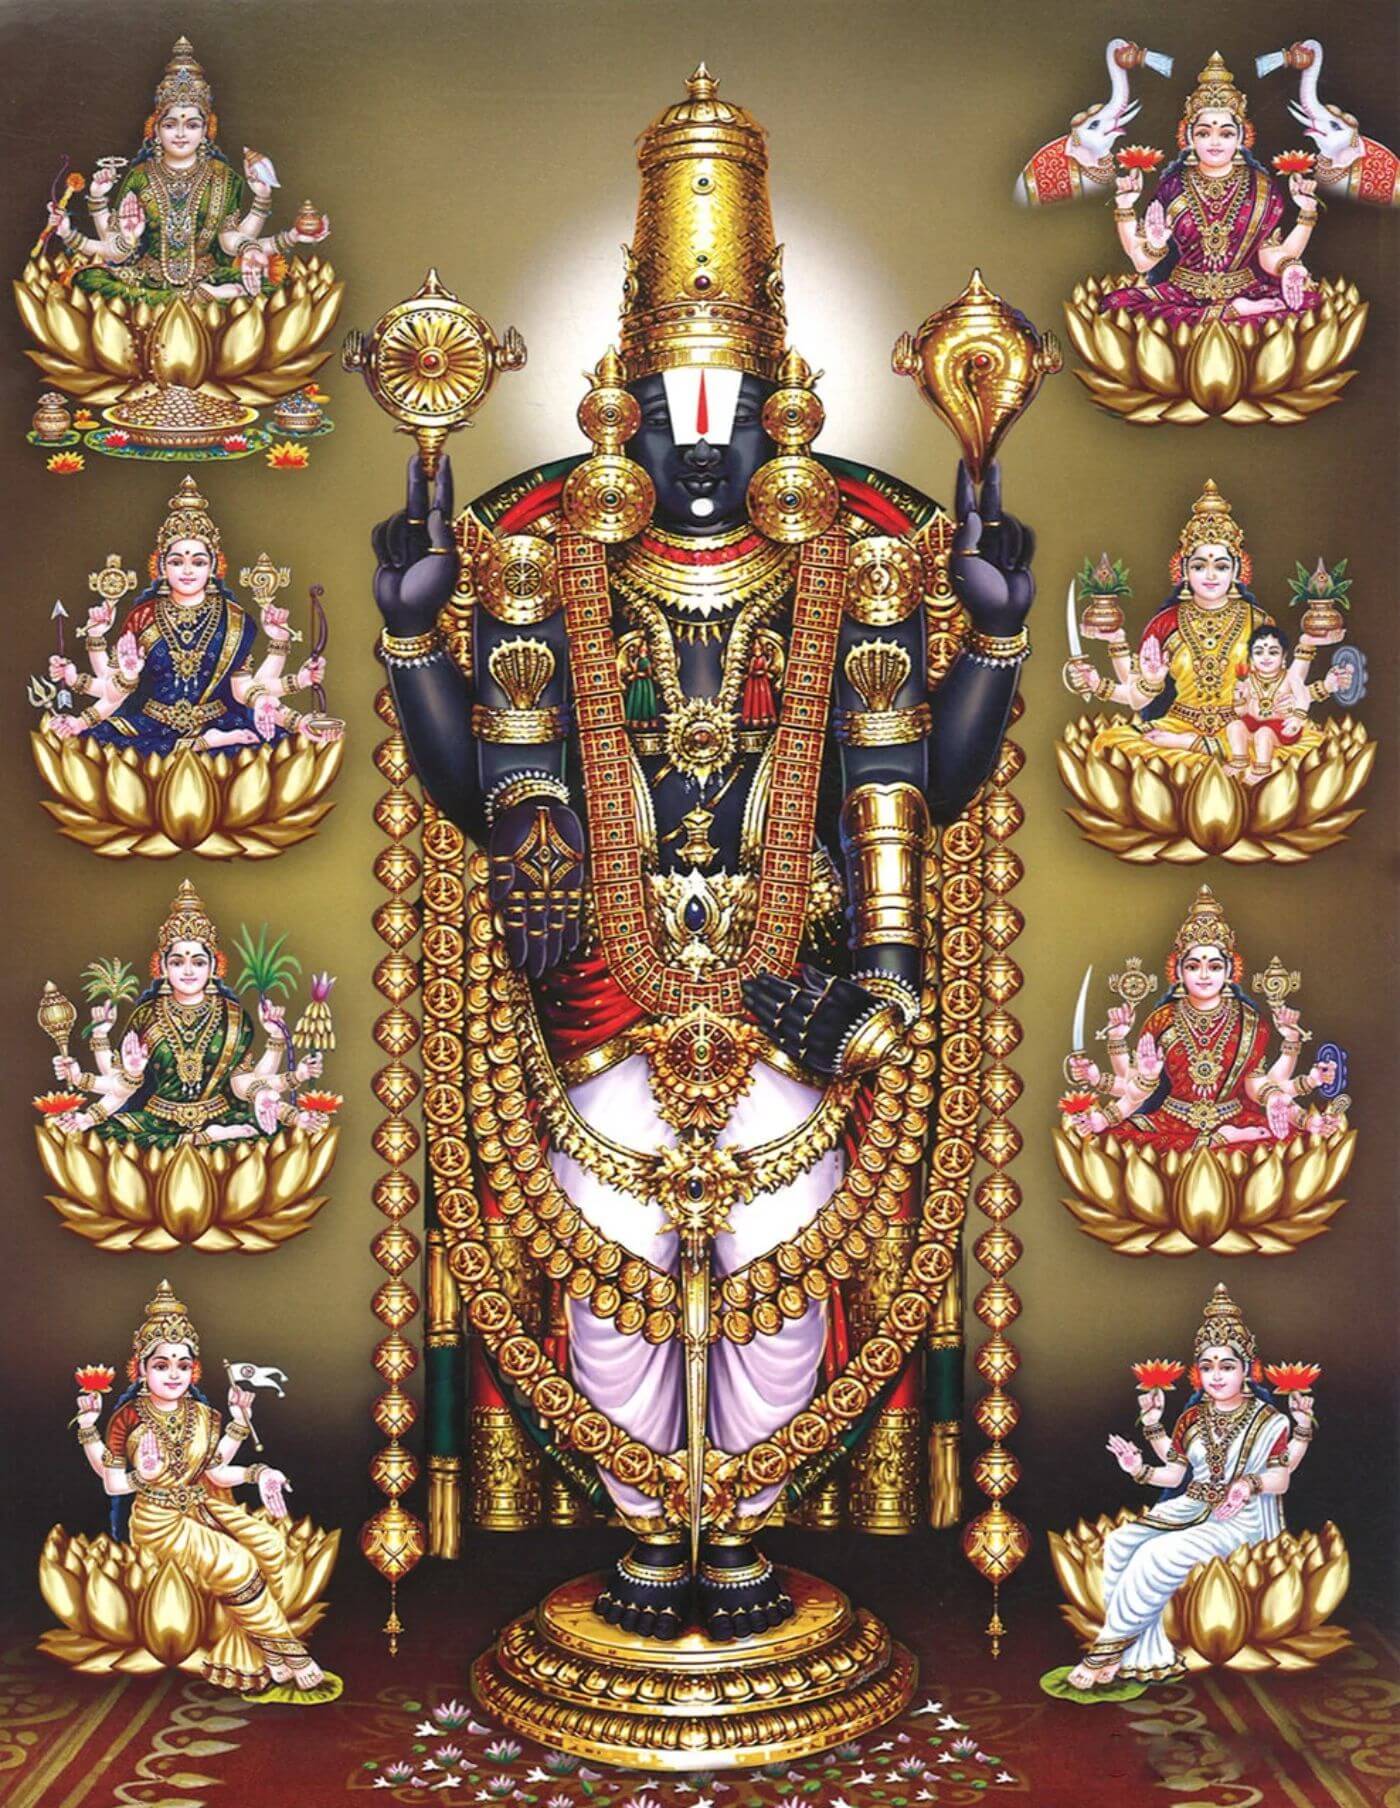 Sri Tirupati Venkateshwara Swamy Photo Frame For wall Size (13.5x9.5  inches) | eBay